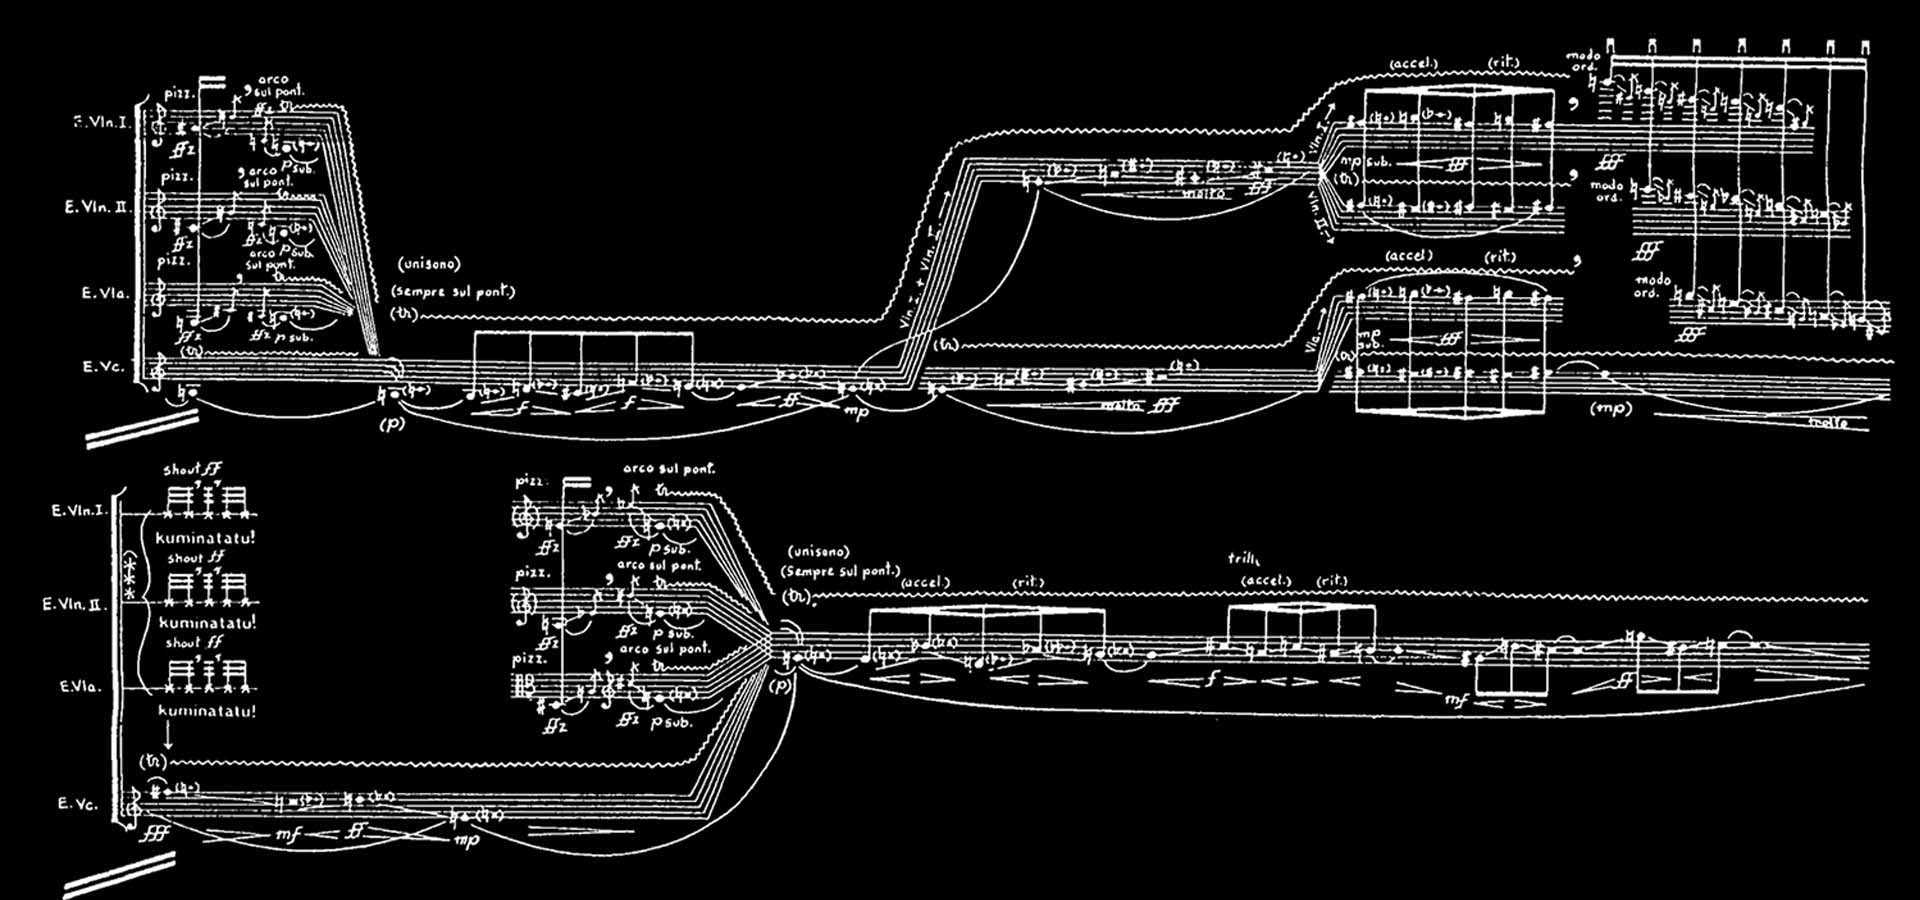 Blueprint image of sheet music.